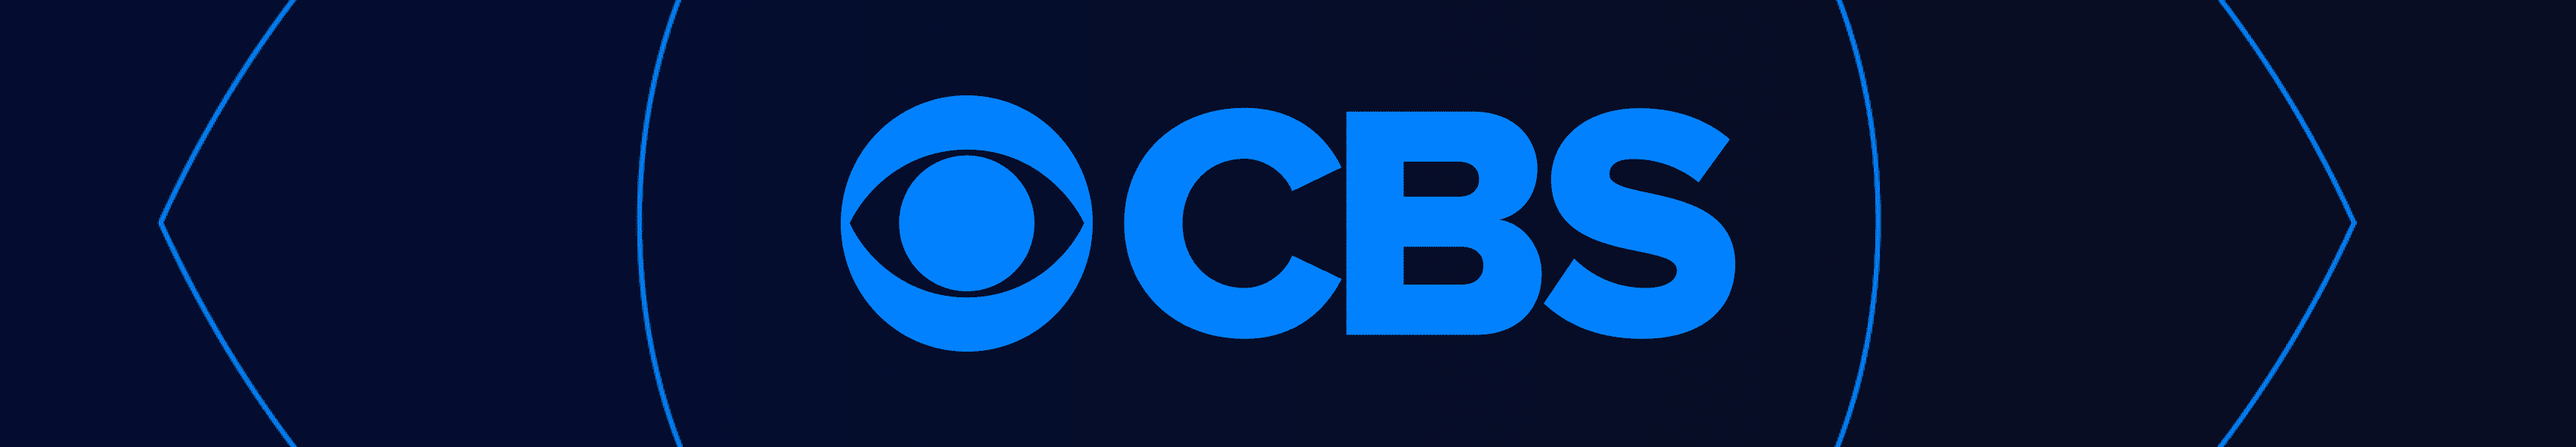 CBS Entertainment Tank Tops